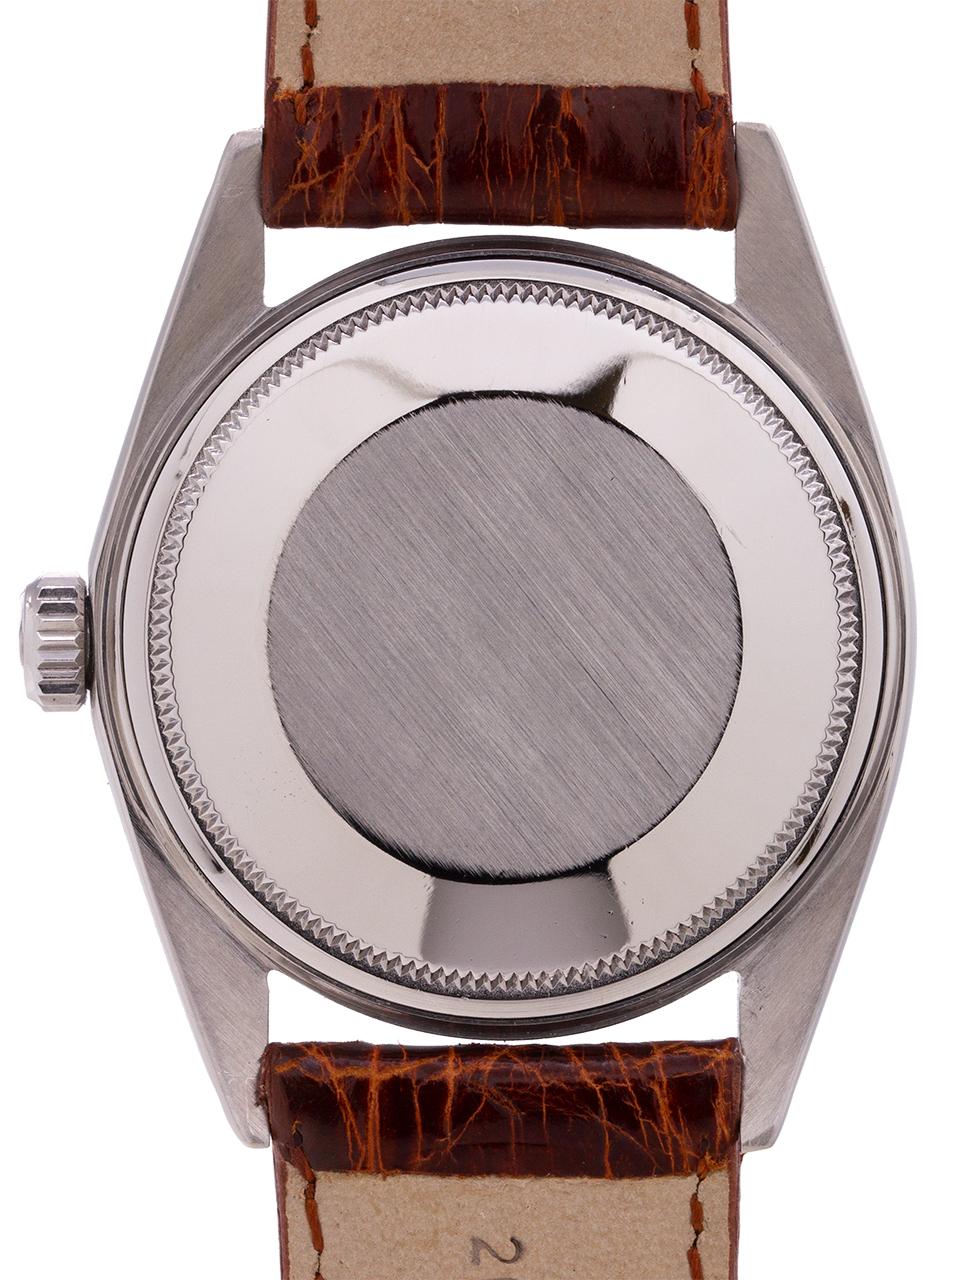 Men's Rolex Stainless Steel Datejust self winding wristwatch Ref 1601, circa 1968